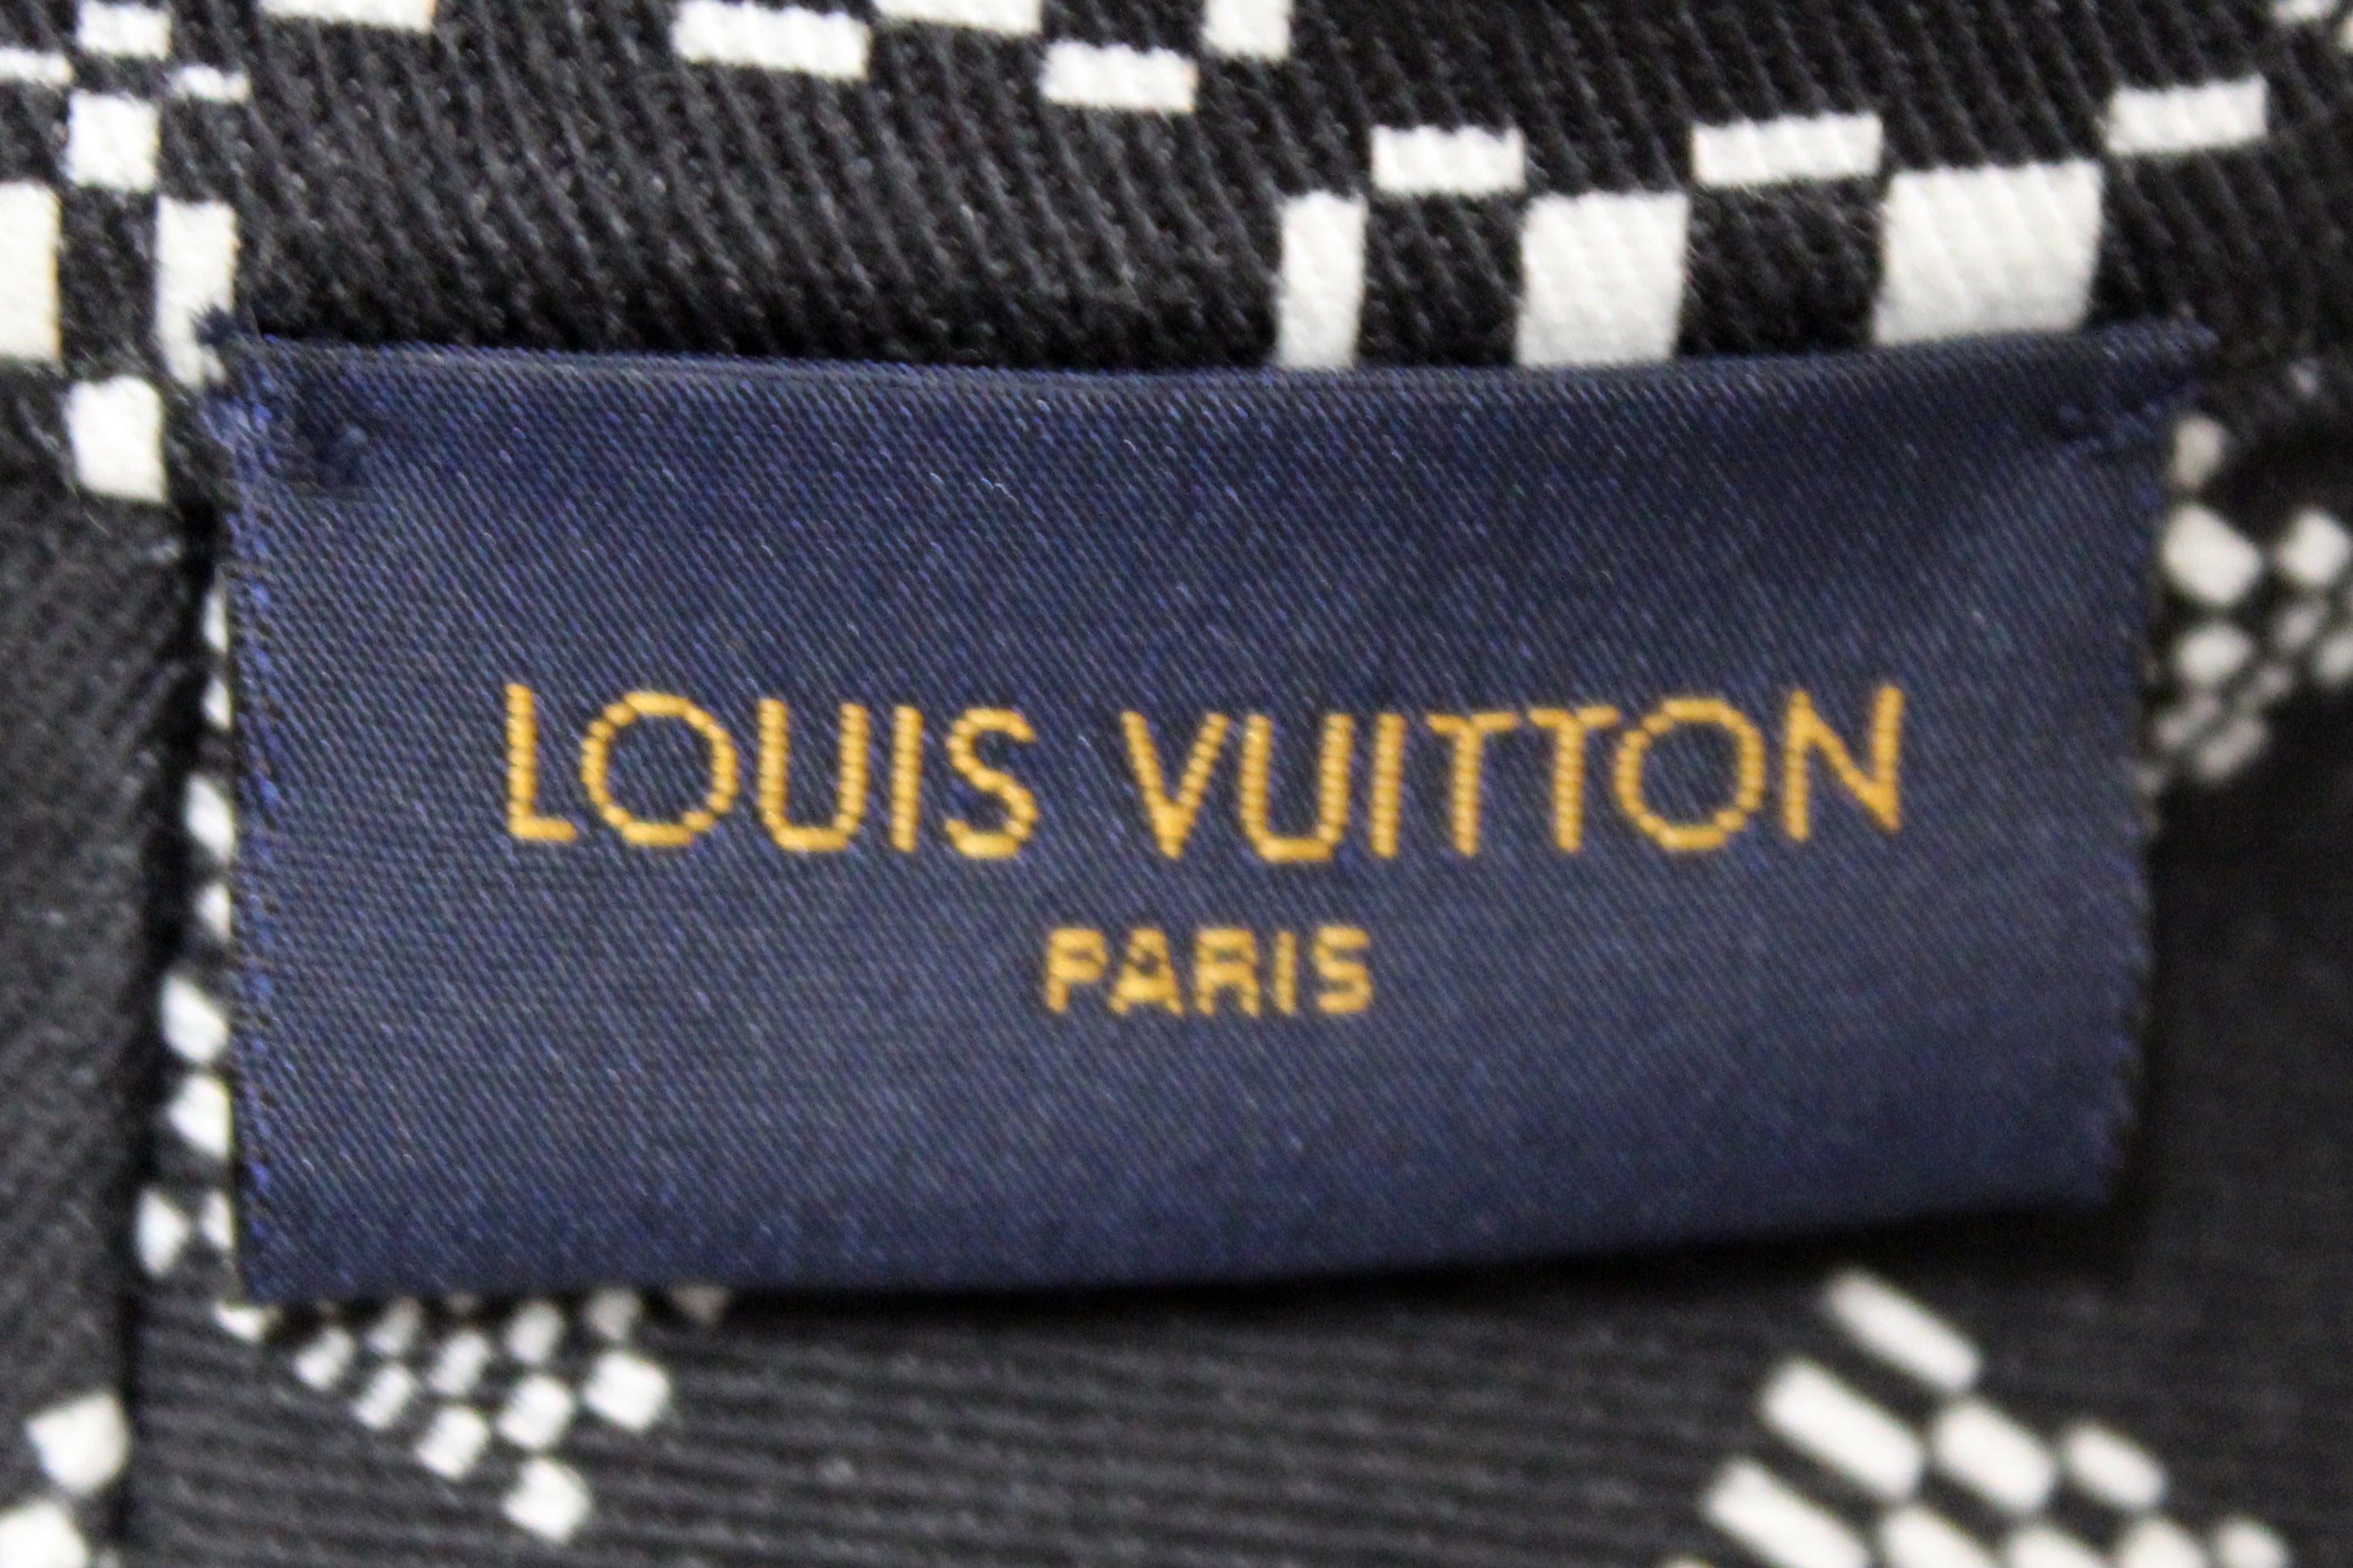 Authentic Louis Vuitton Black x White Distorted Damier Reversible Bucket Hat